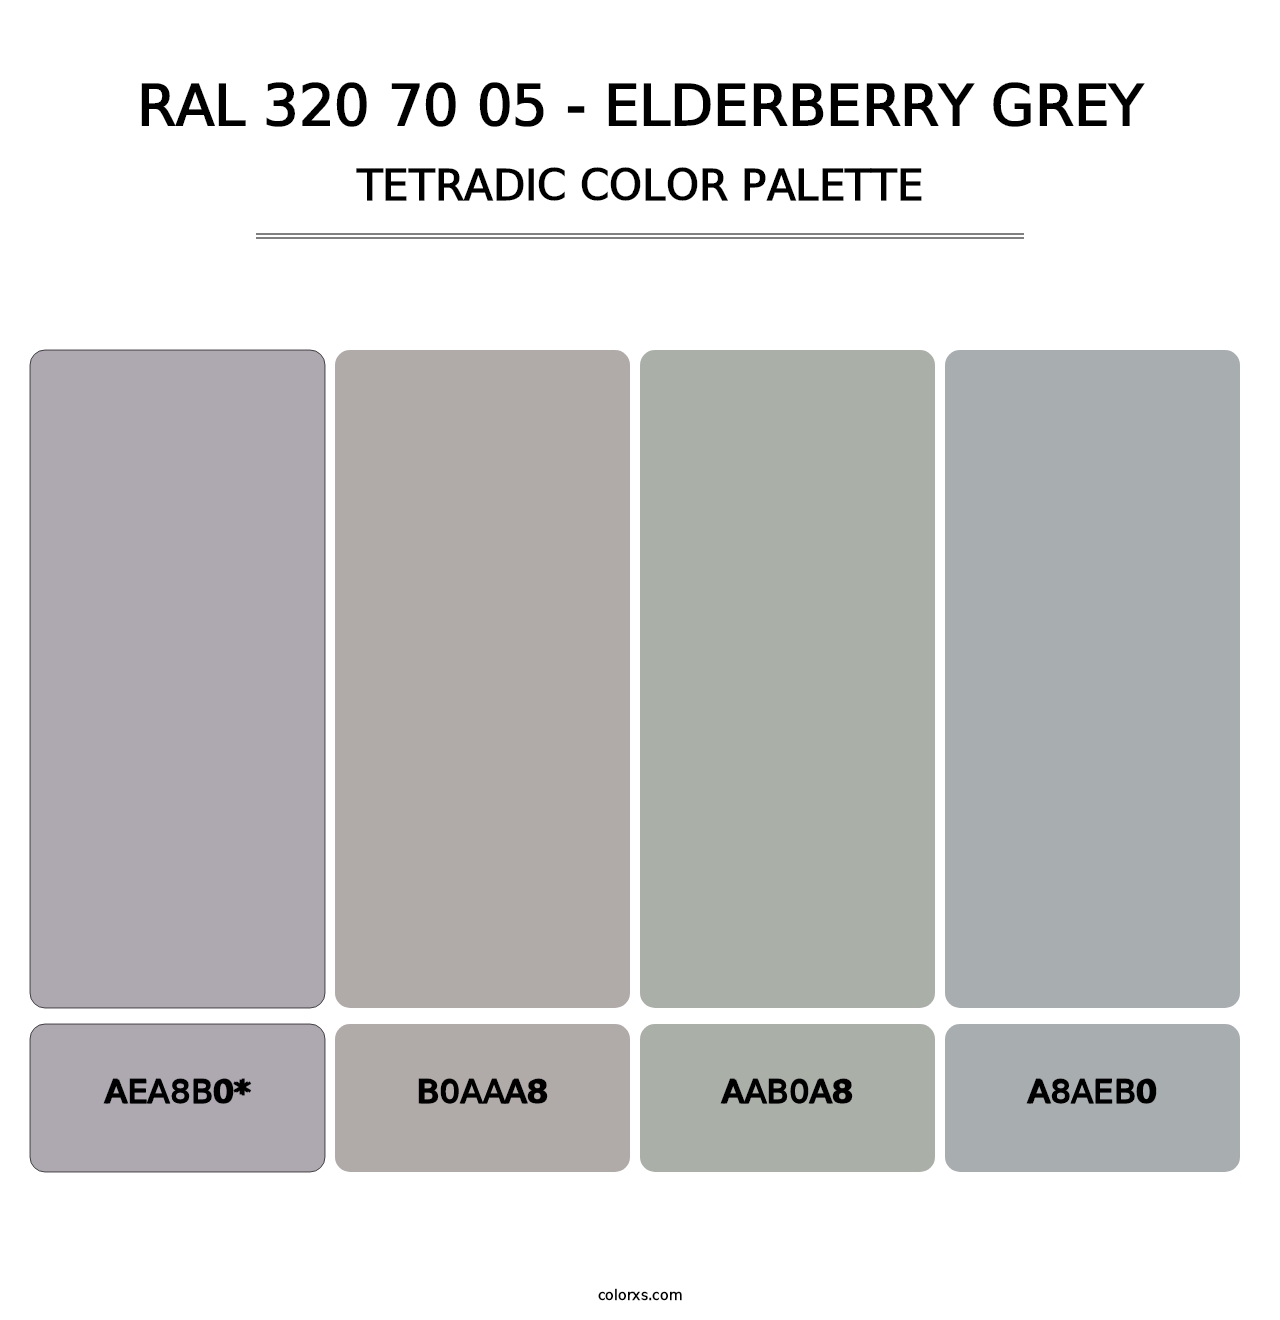 RAL 320 70 05 - Elderberry Grey - Tetradic Color Palette